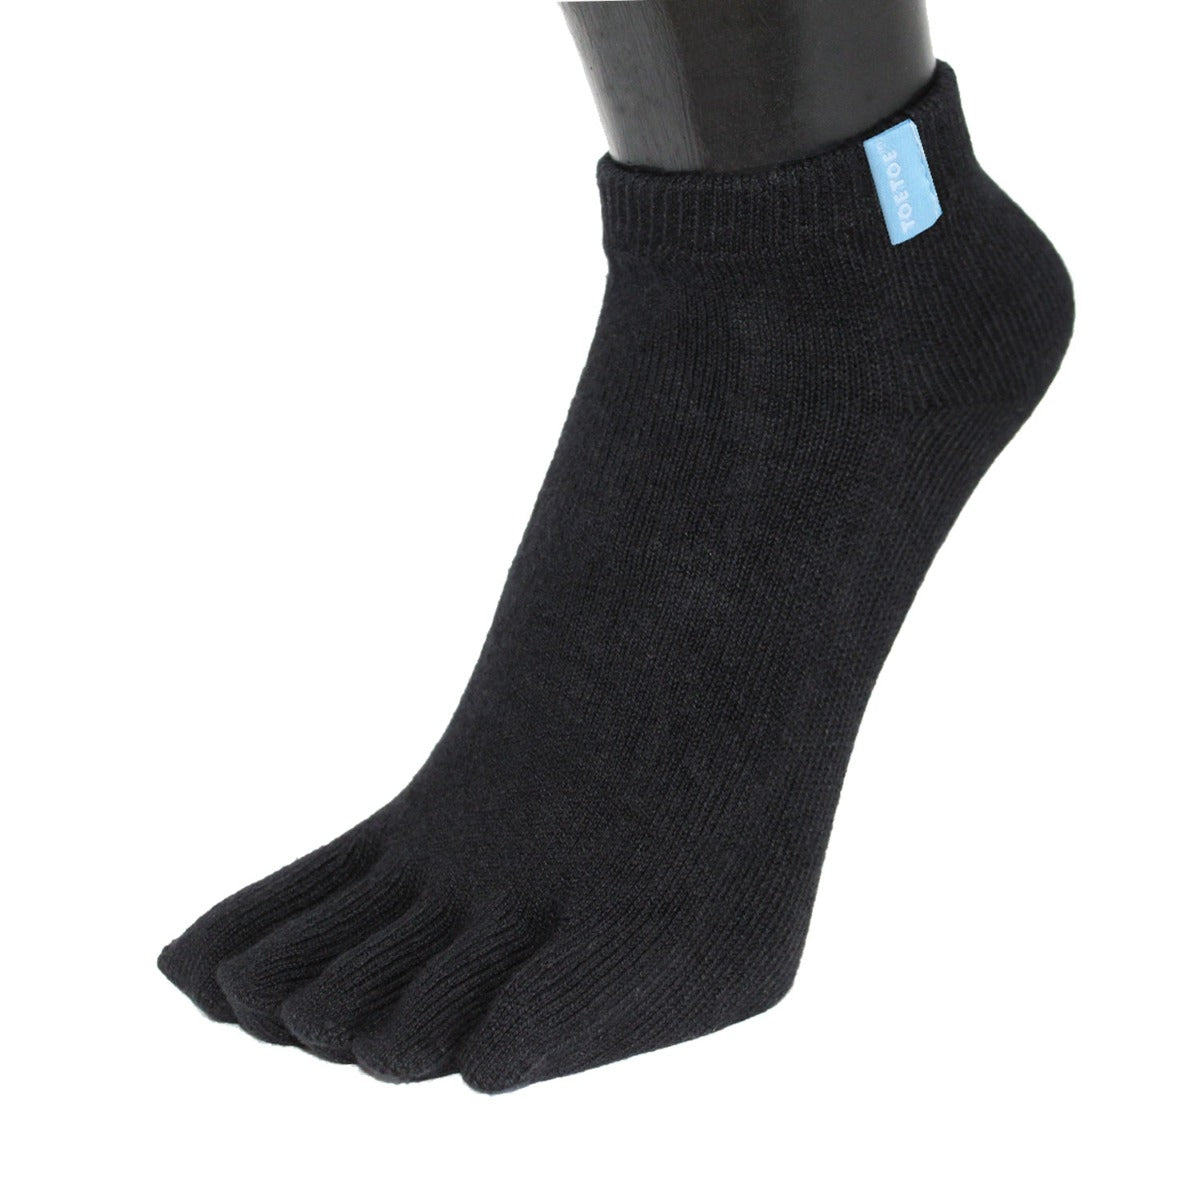 Toe Socks Essential Anklet Black